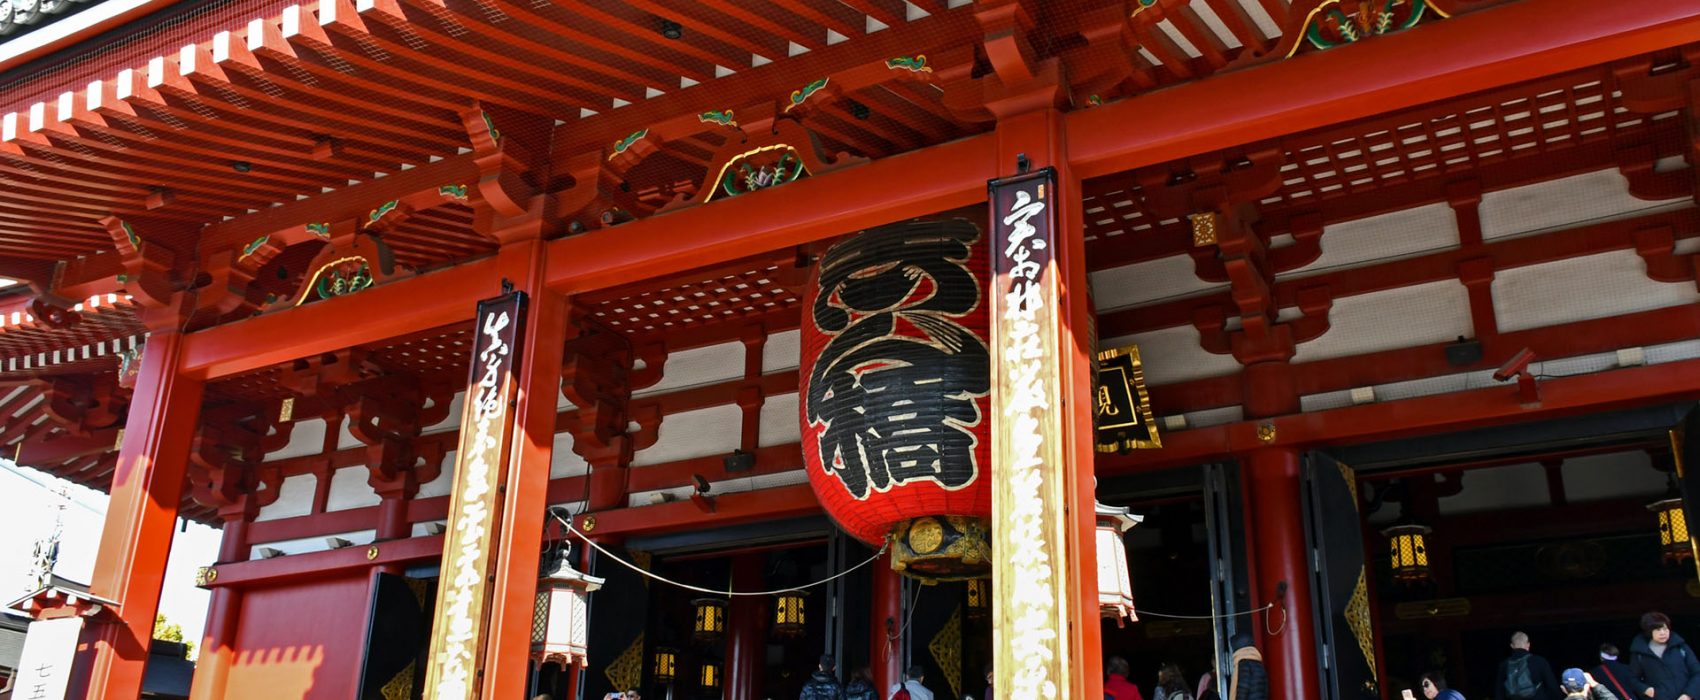 10 Must Visit Temples in Japan